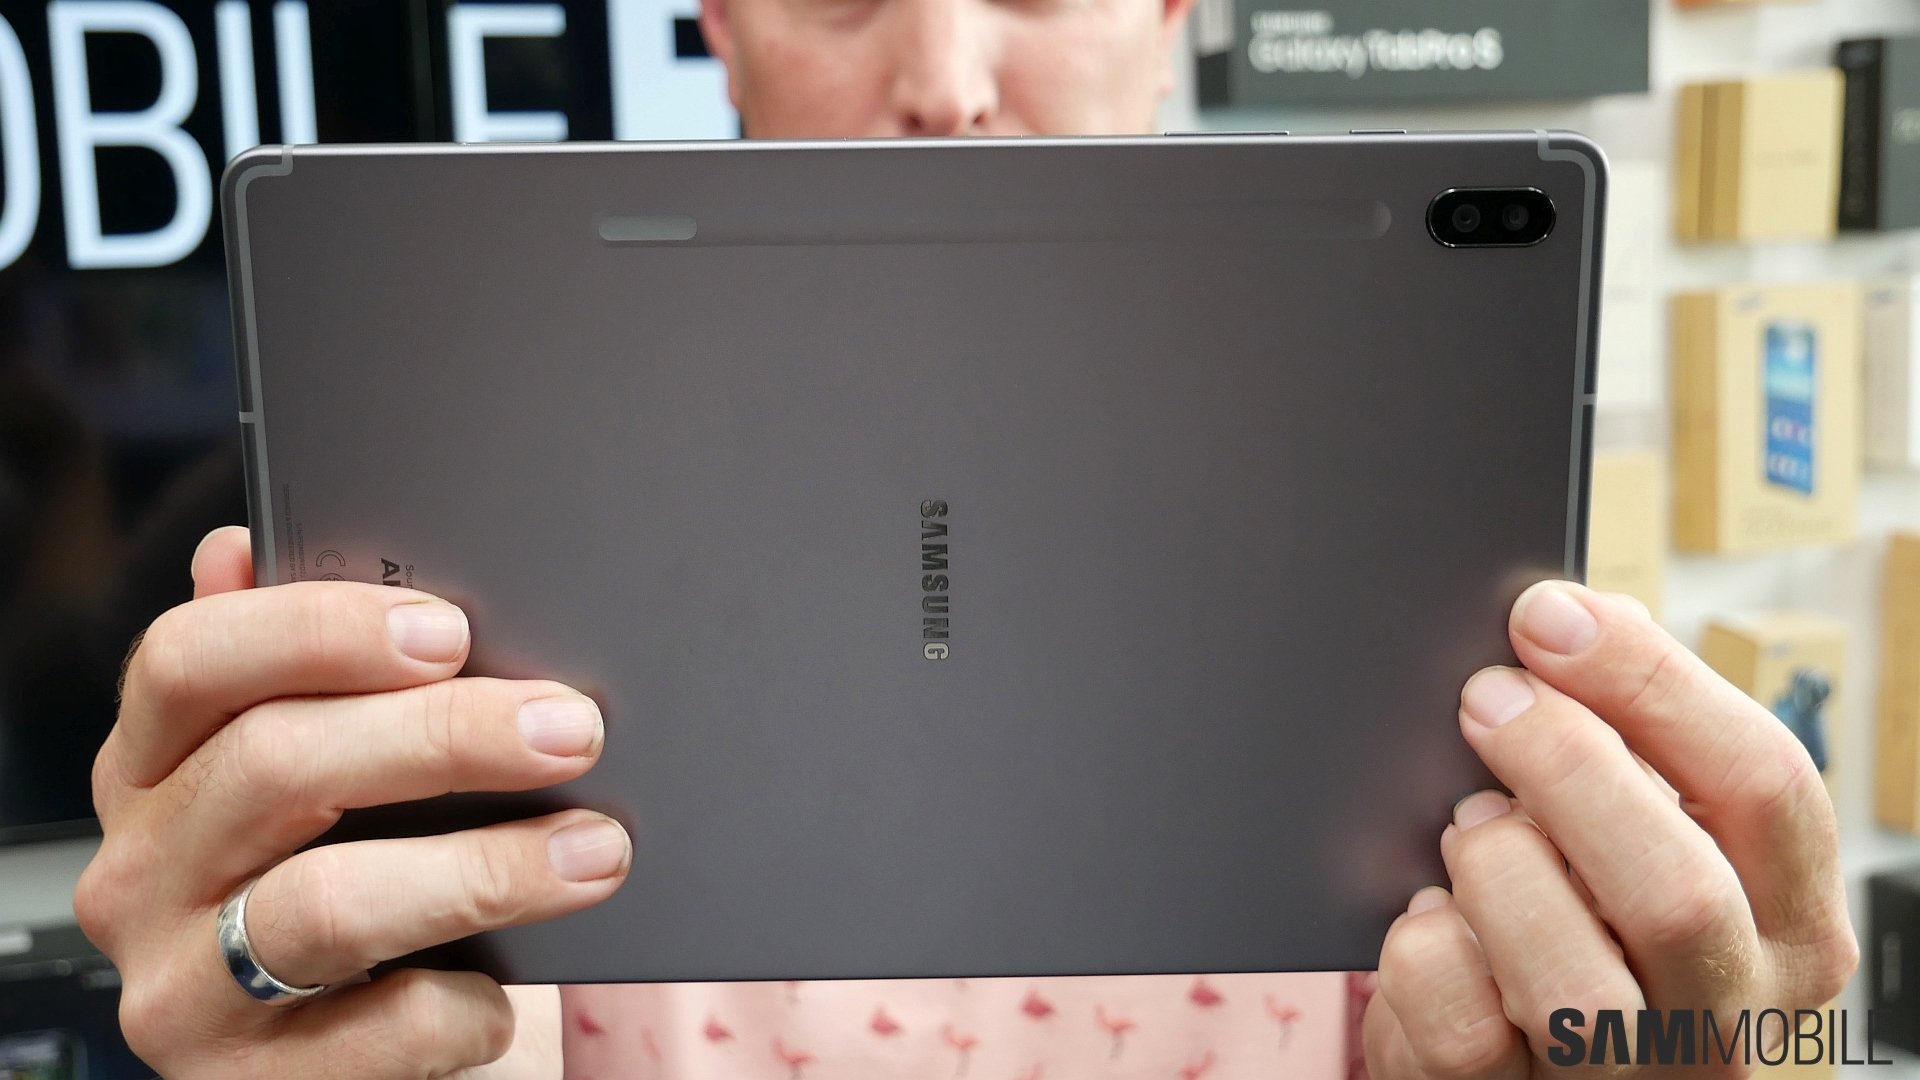 Verraad Noordoosten Larry Belmont Samsung Galaxy Tab S6 review: The top Android tablet of 2019 - SamMobile